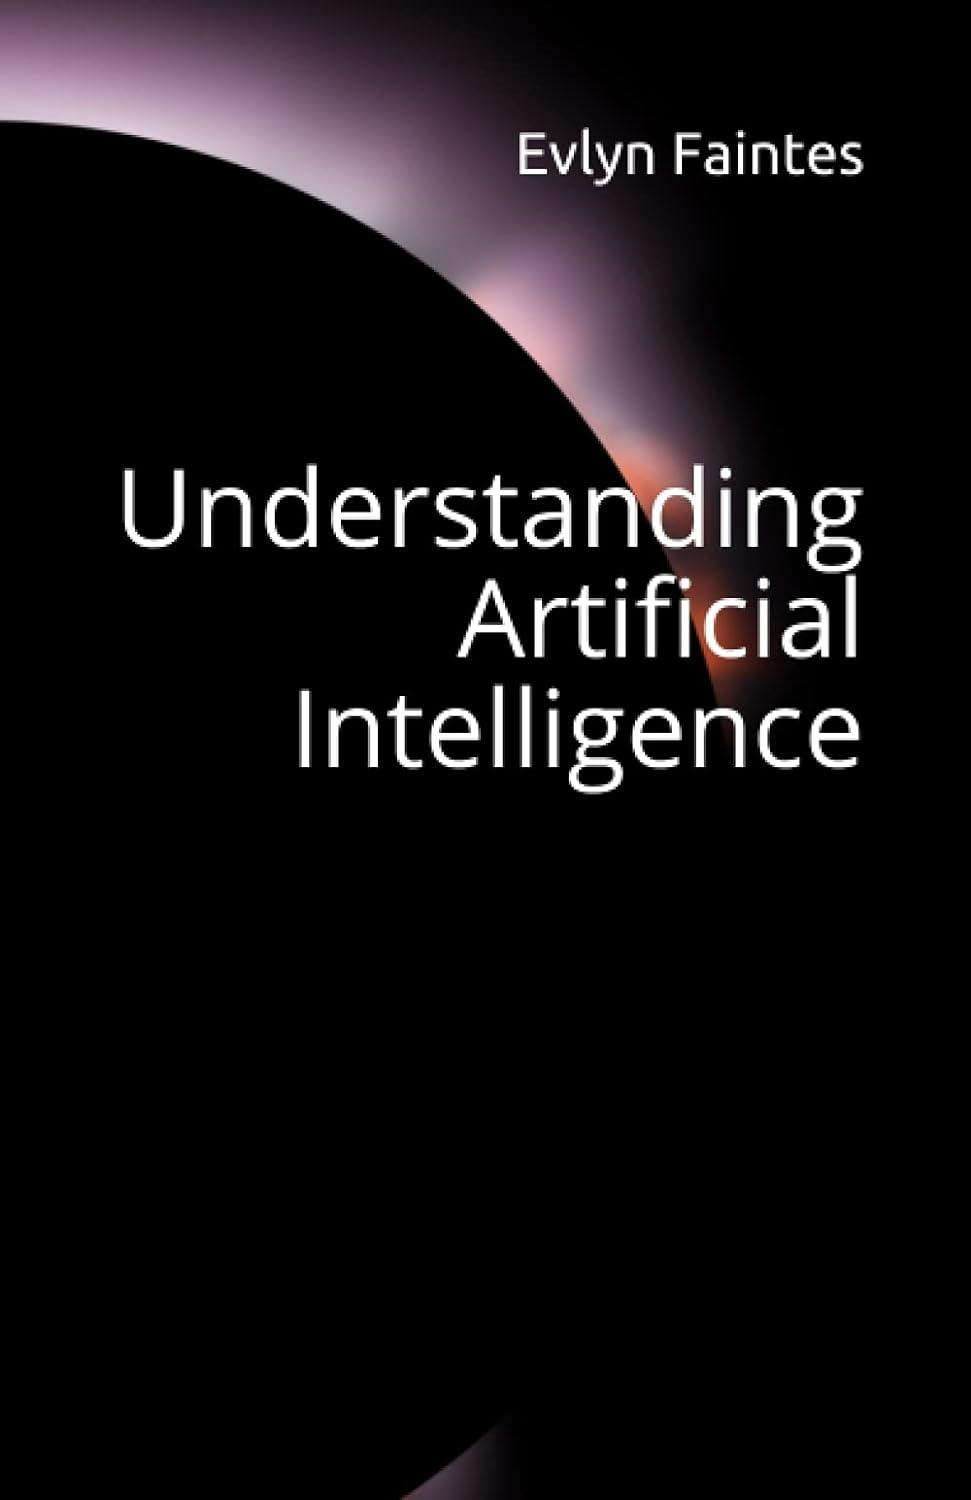 understanding artificial intelligence 1st edition evlyn faintes b092p78qrl, 979-8739104113